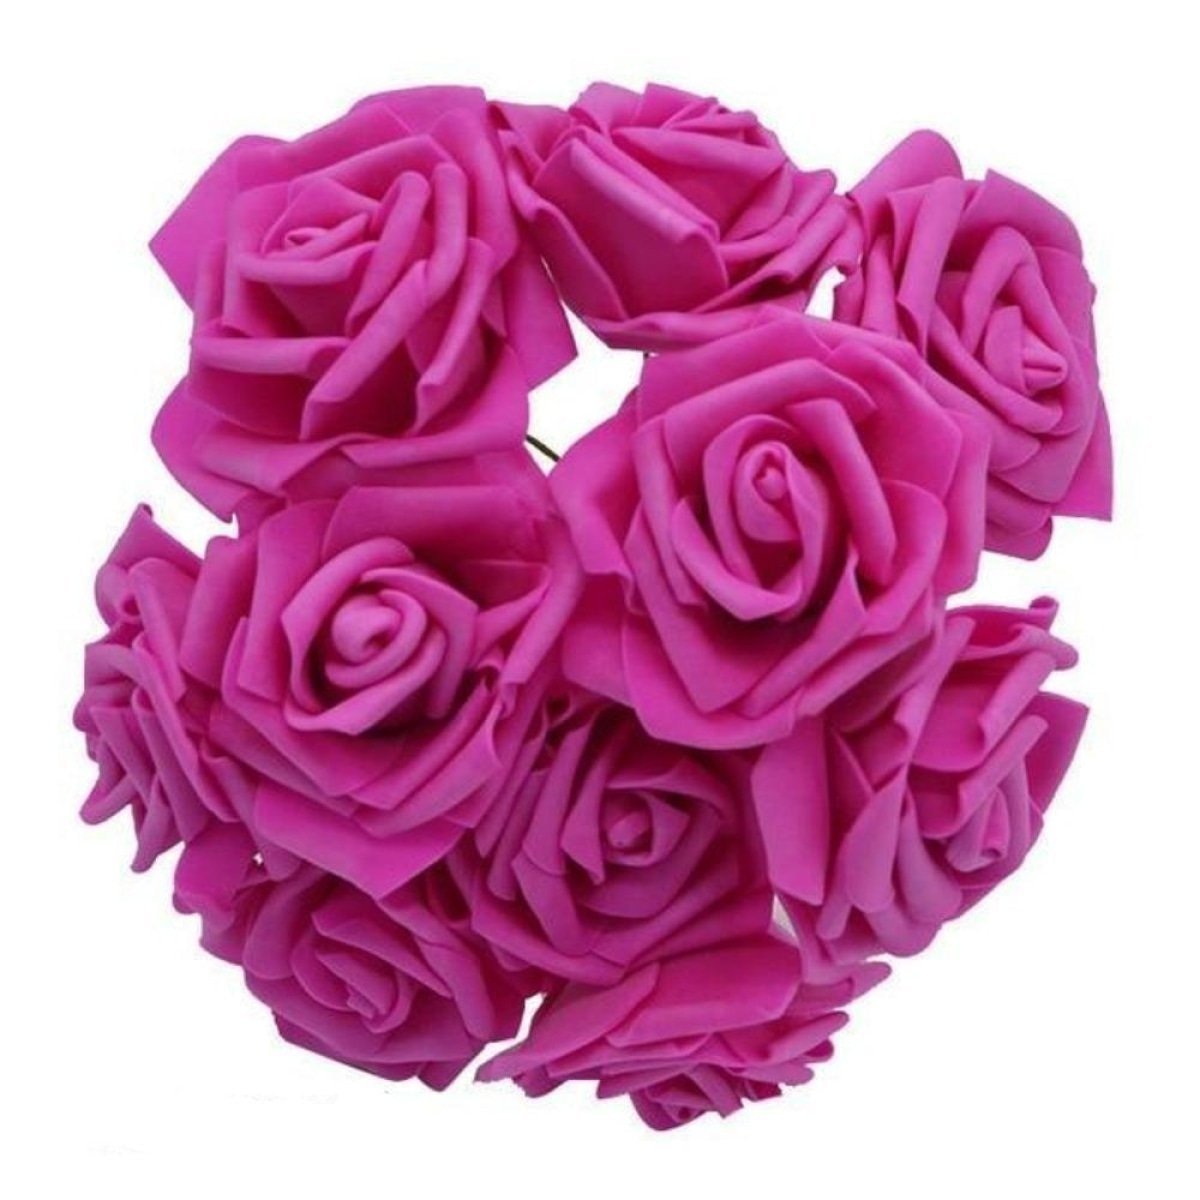 20pcs 8cm Artificial Flowers Foam Rose Fake Bride Bouquet Wedding - Rose Red / Dark Pink - - Asia Sell